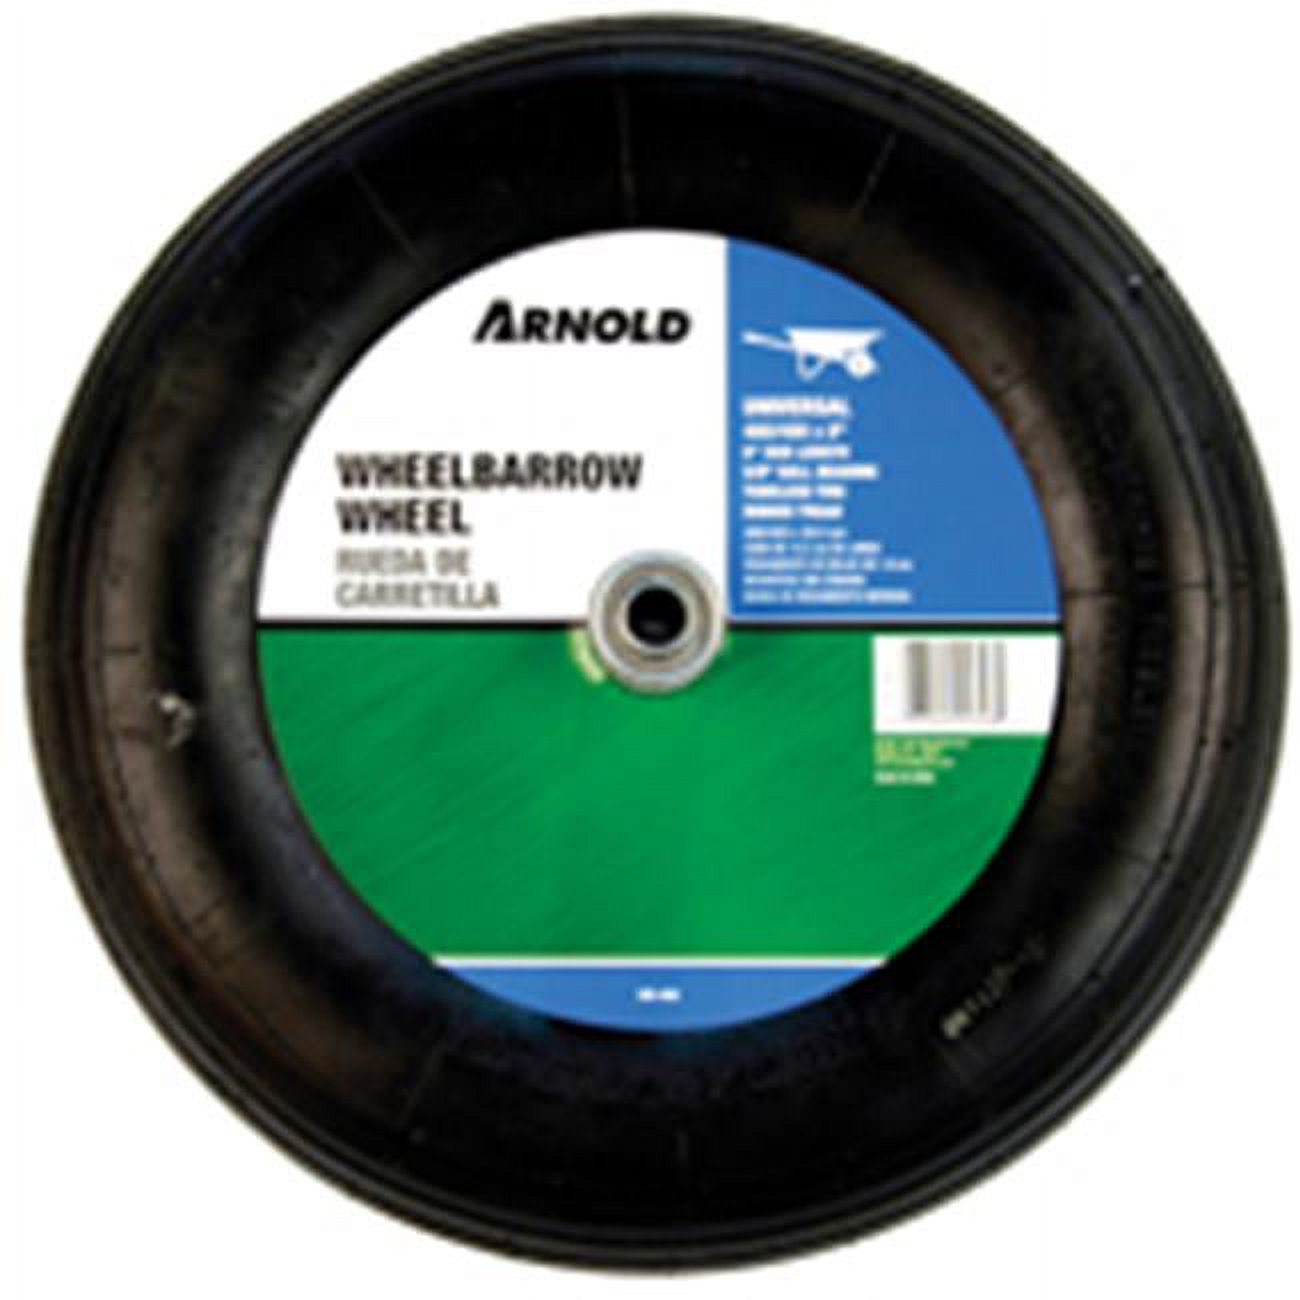 Arnold 6 In. Hub Pneumatic Wheelbarrow Wheel - image 1 of 2